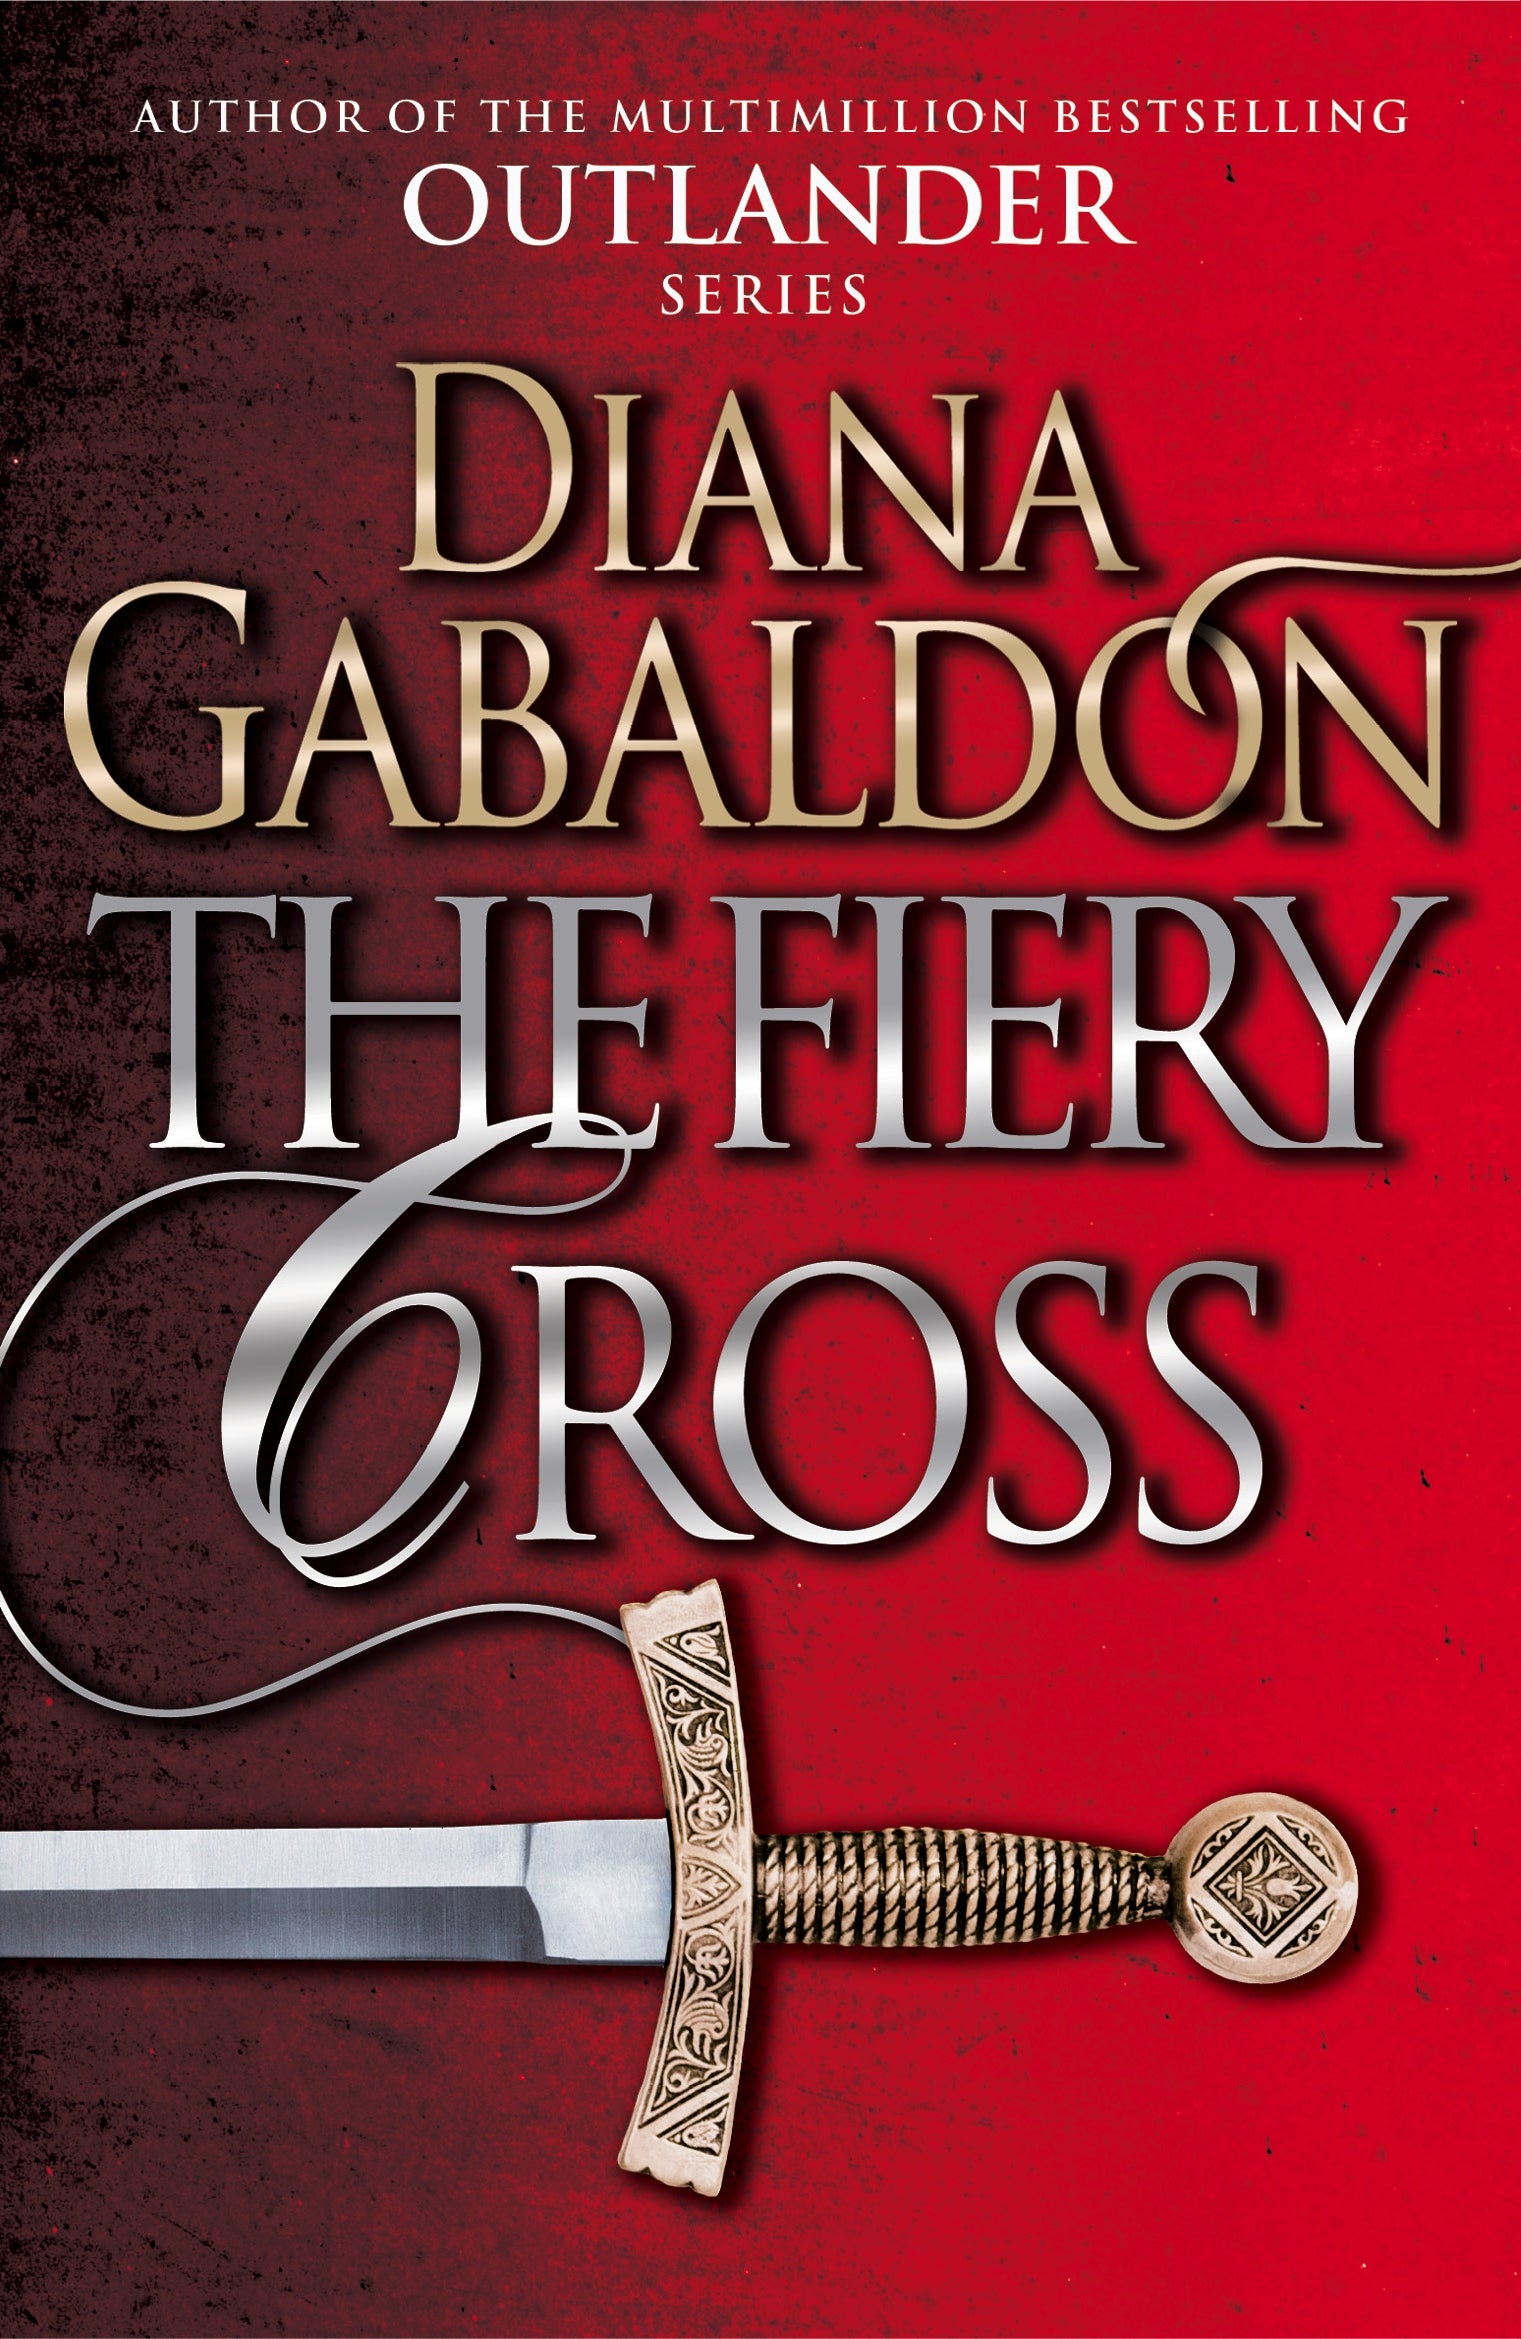 Outlander 5: Fiery Cross by Diana Gabaldon - City Books & Lotto